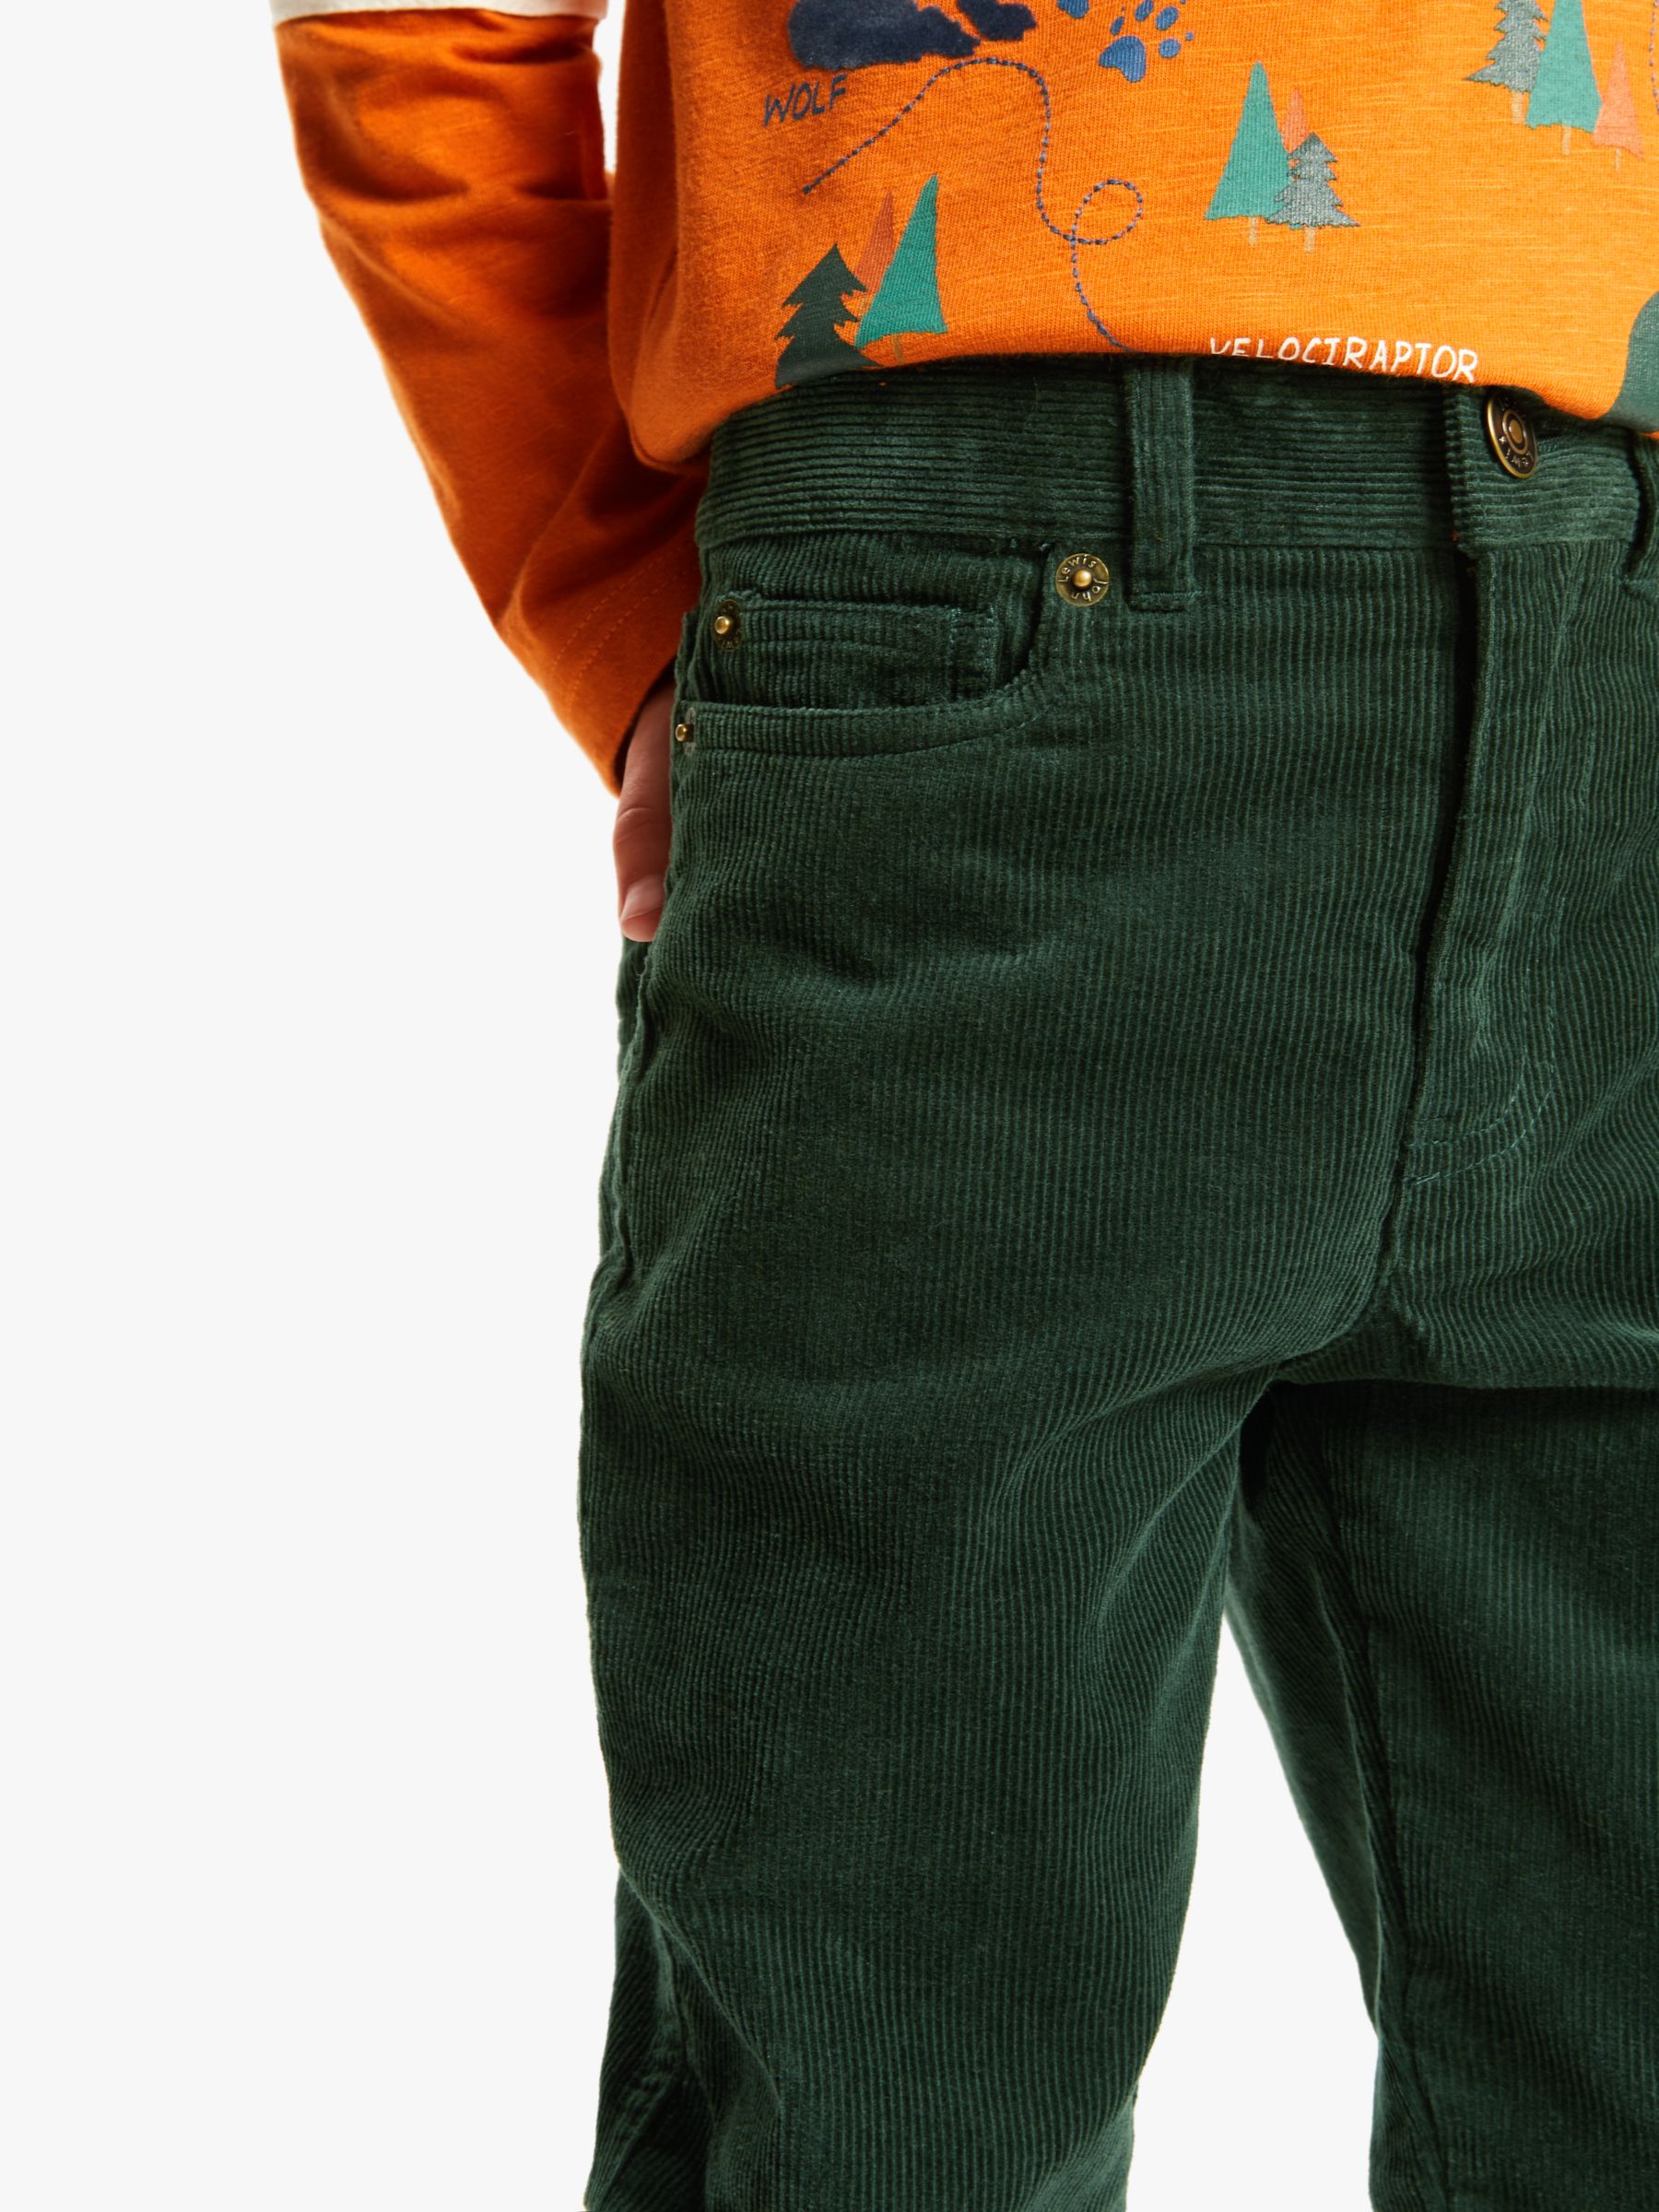 corduroy trousers green